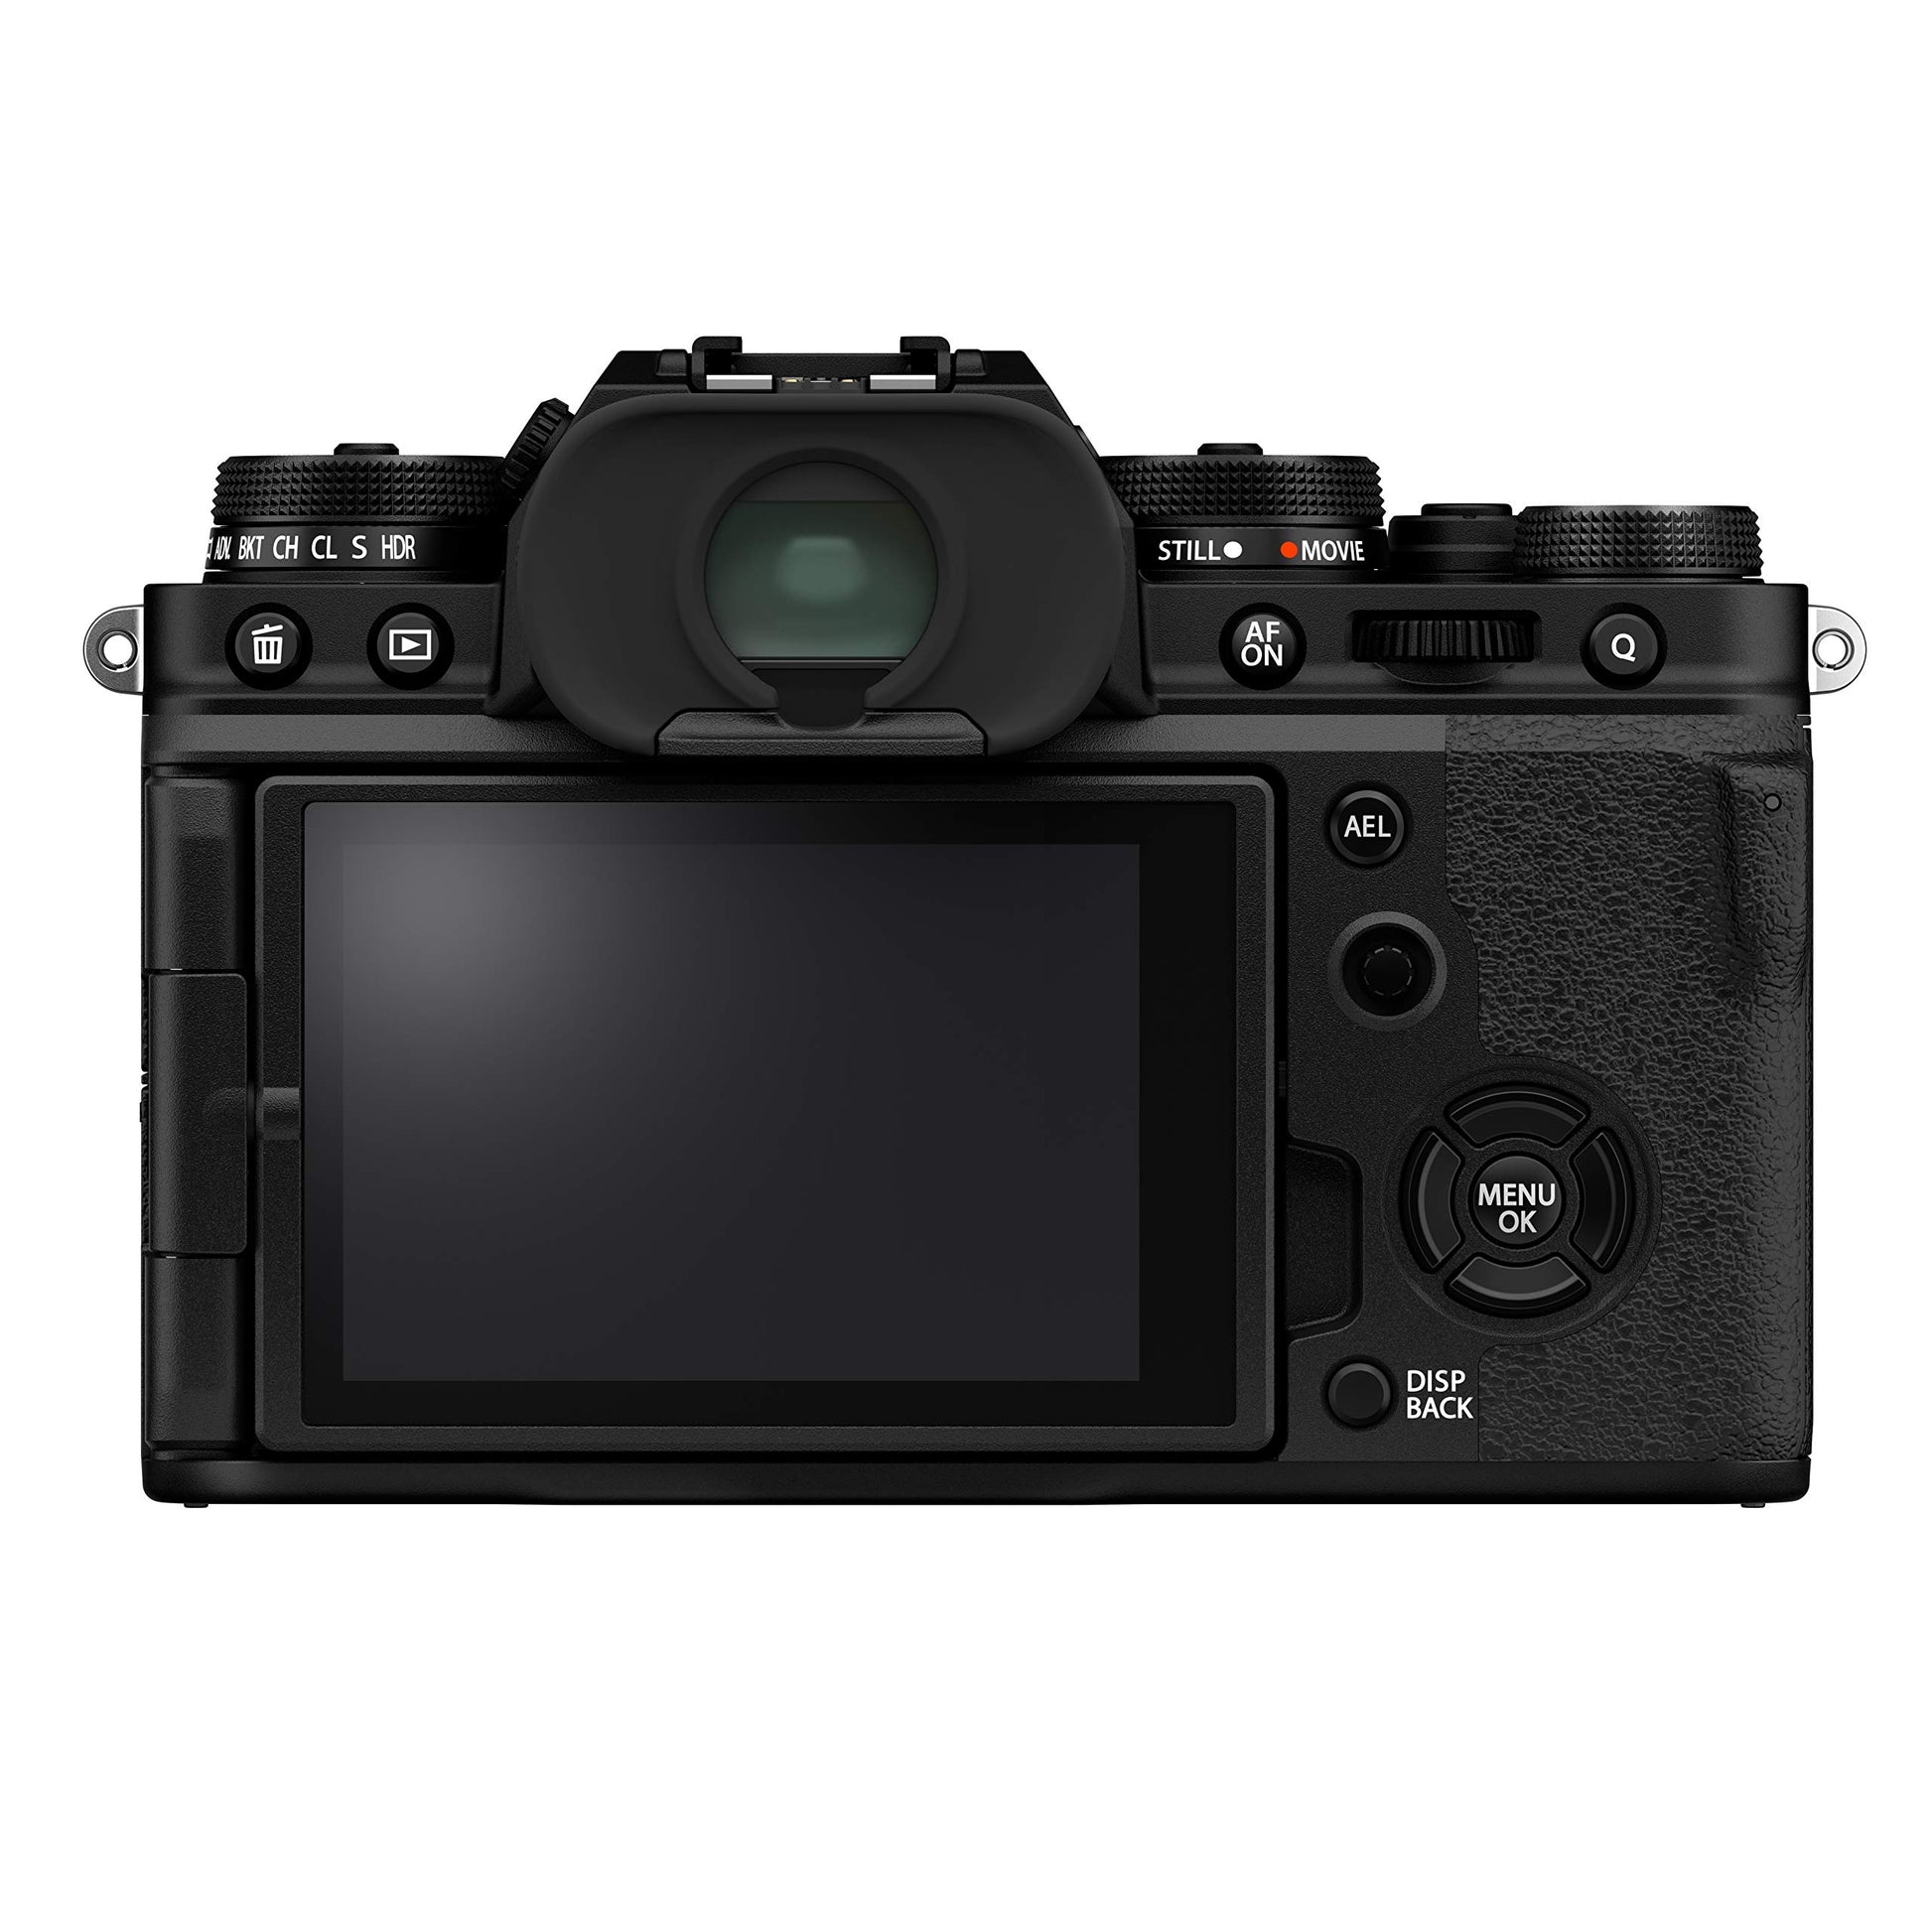 Fujifilm X-T4 Camera